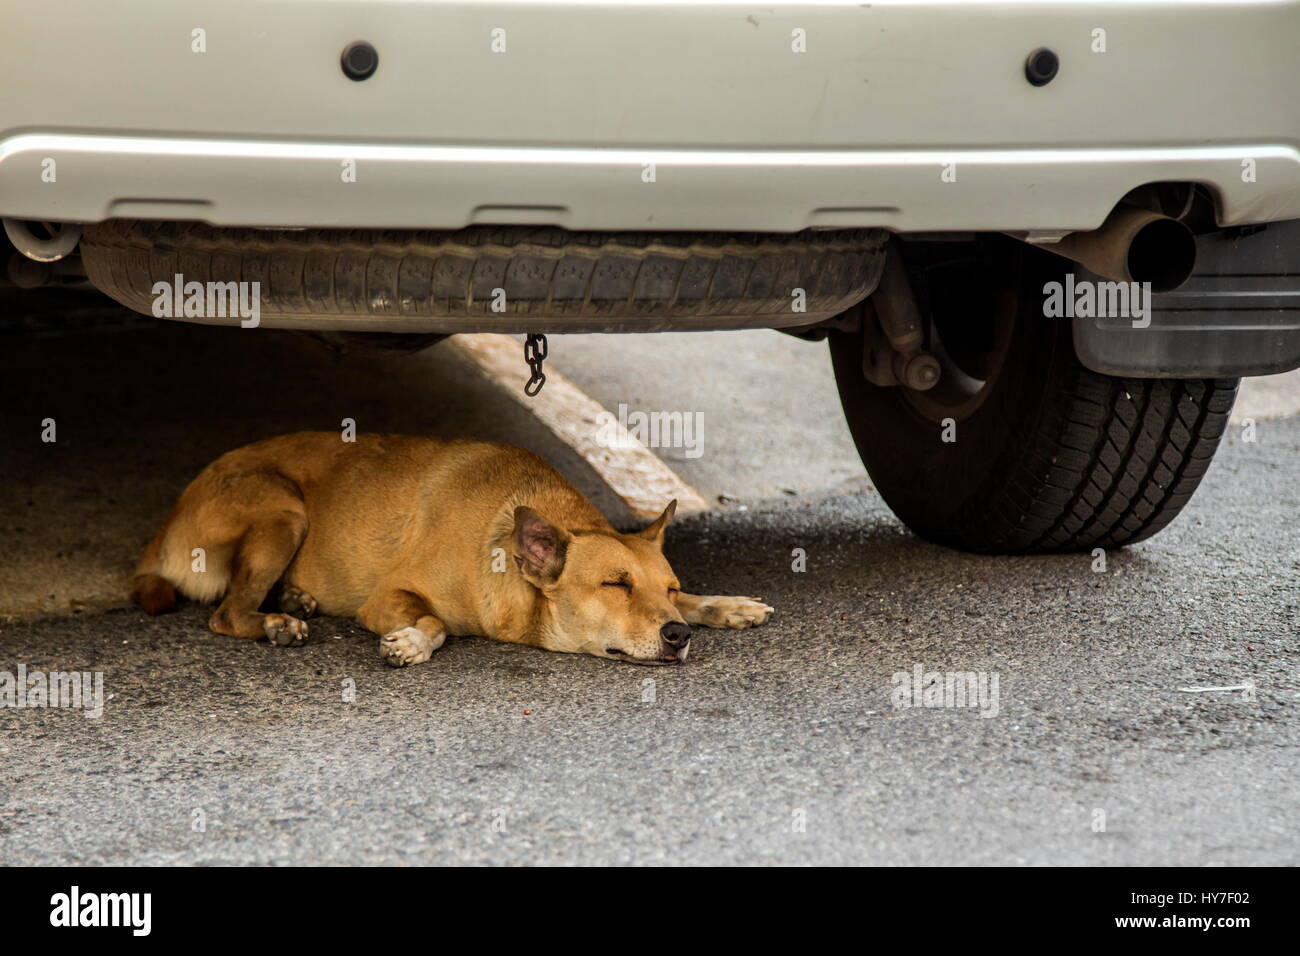 Sleeping brown dog under the SUV car Stock Photo